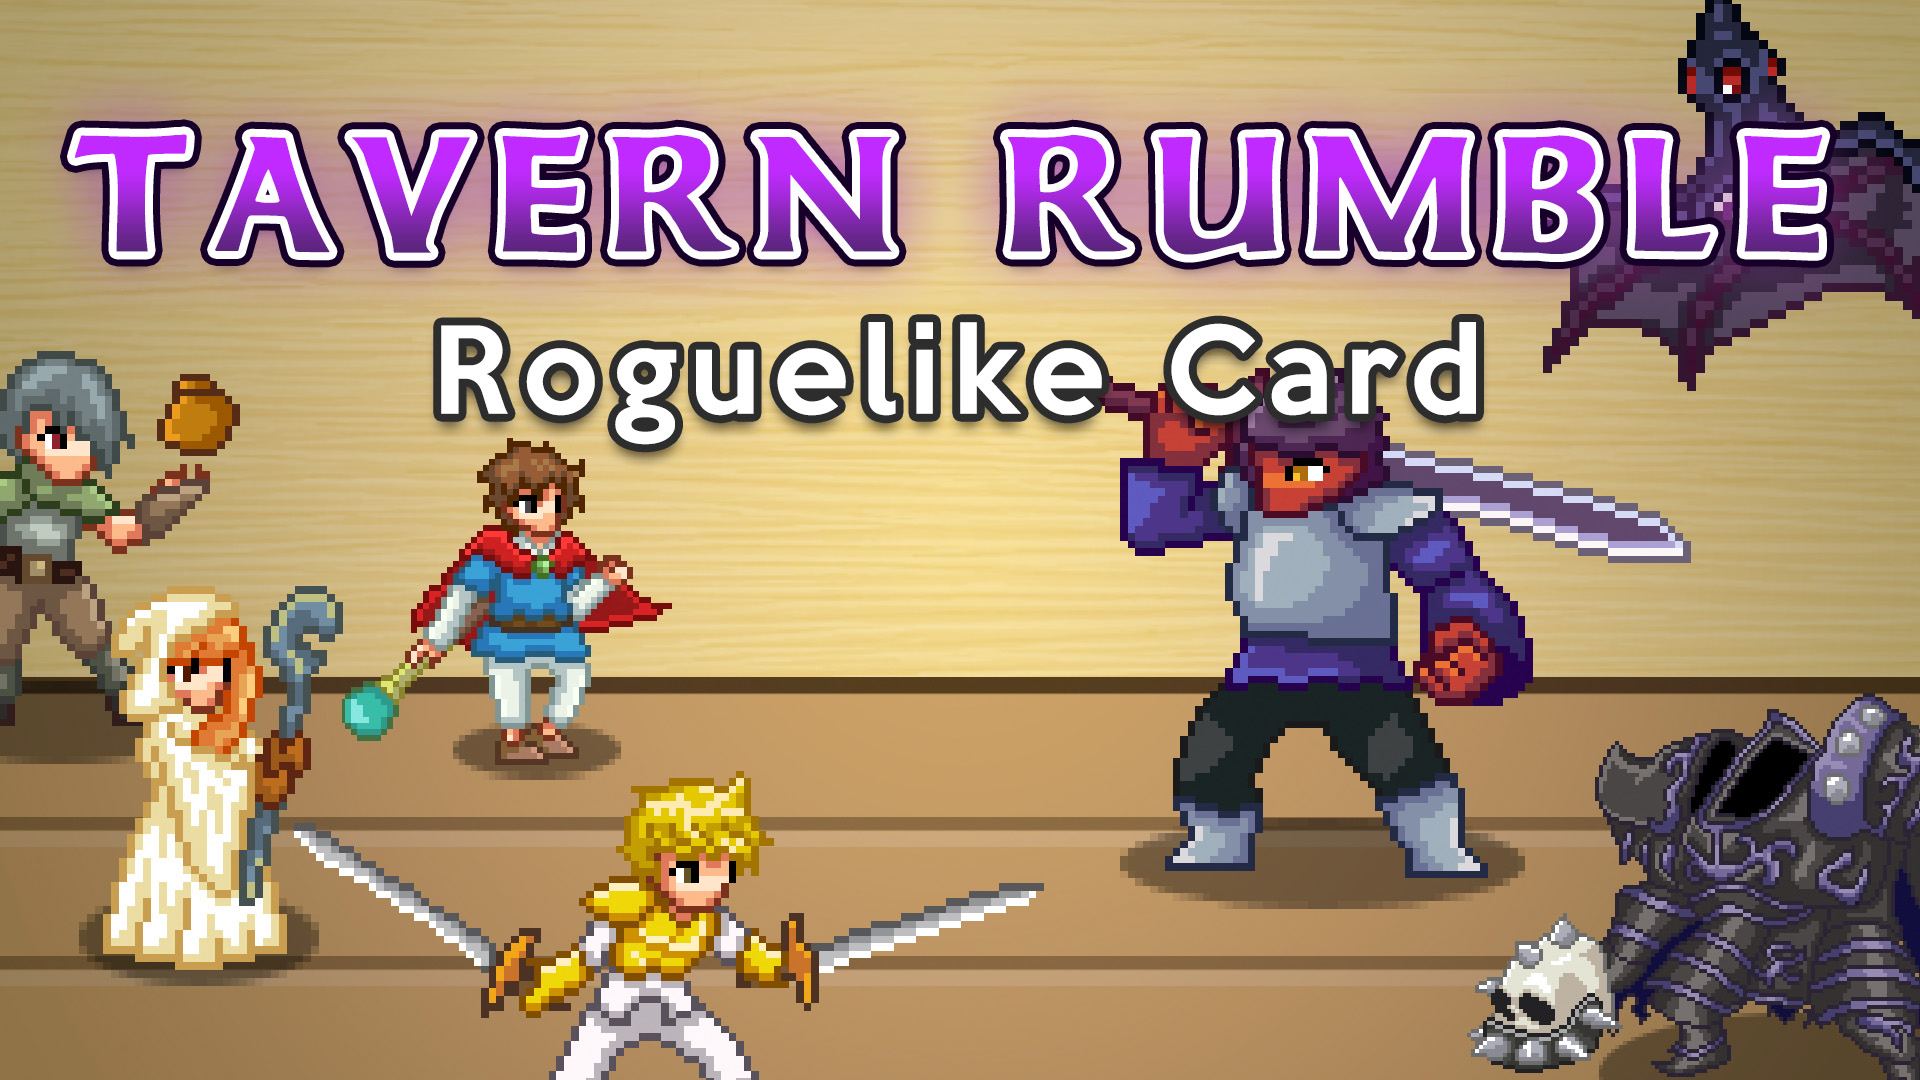 Tavern Rumble: Roguelike Card Game Image